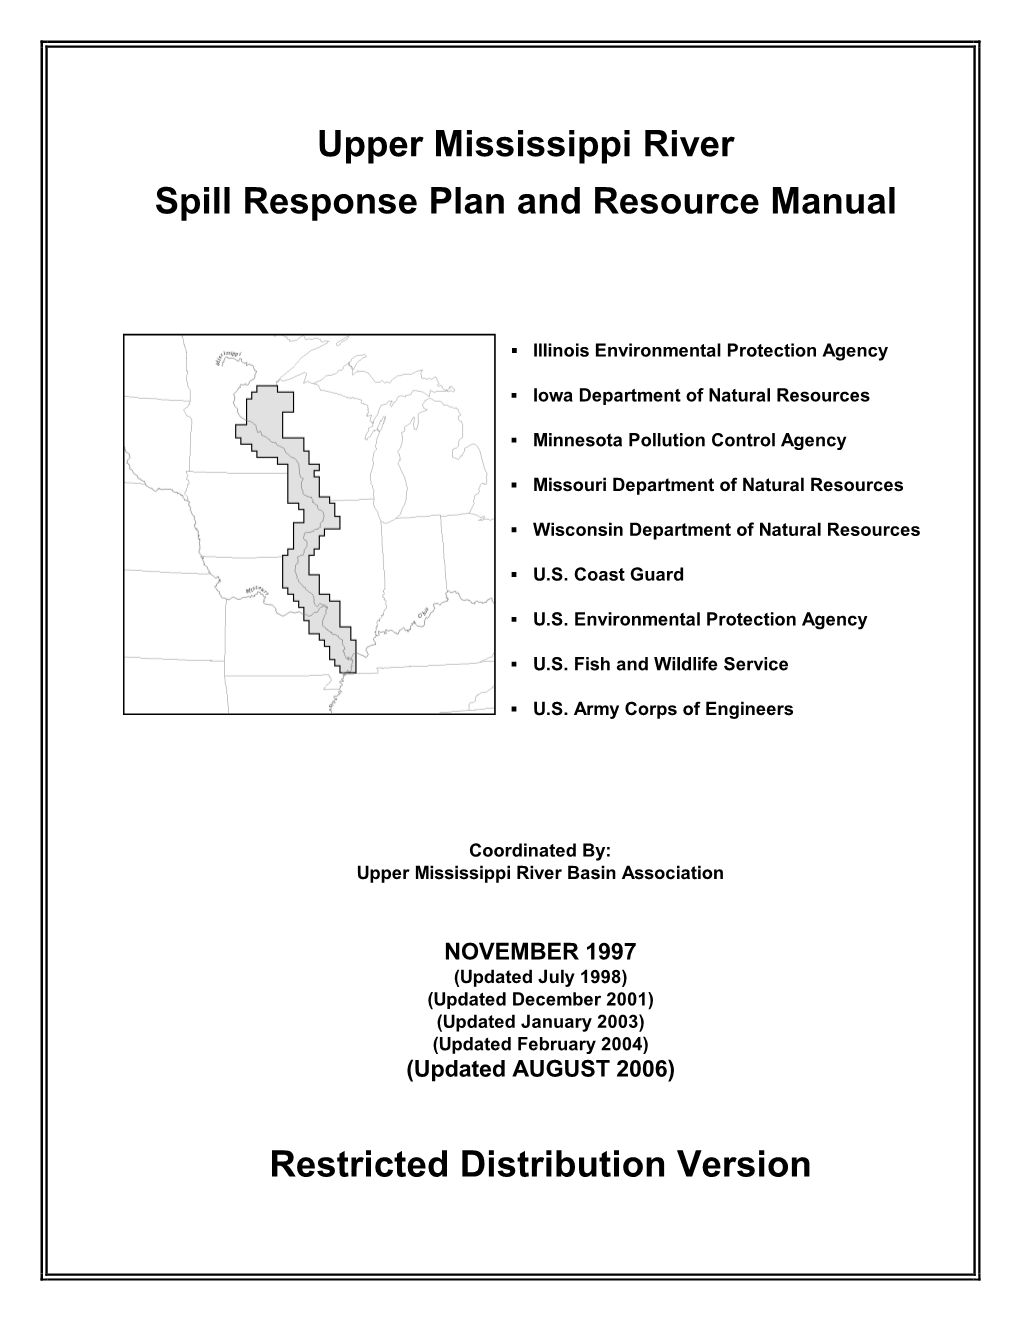 UMR Spill Response Plan and Resource Manual